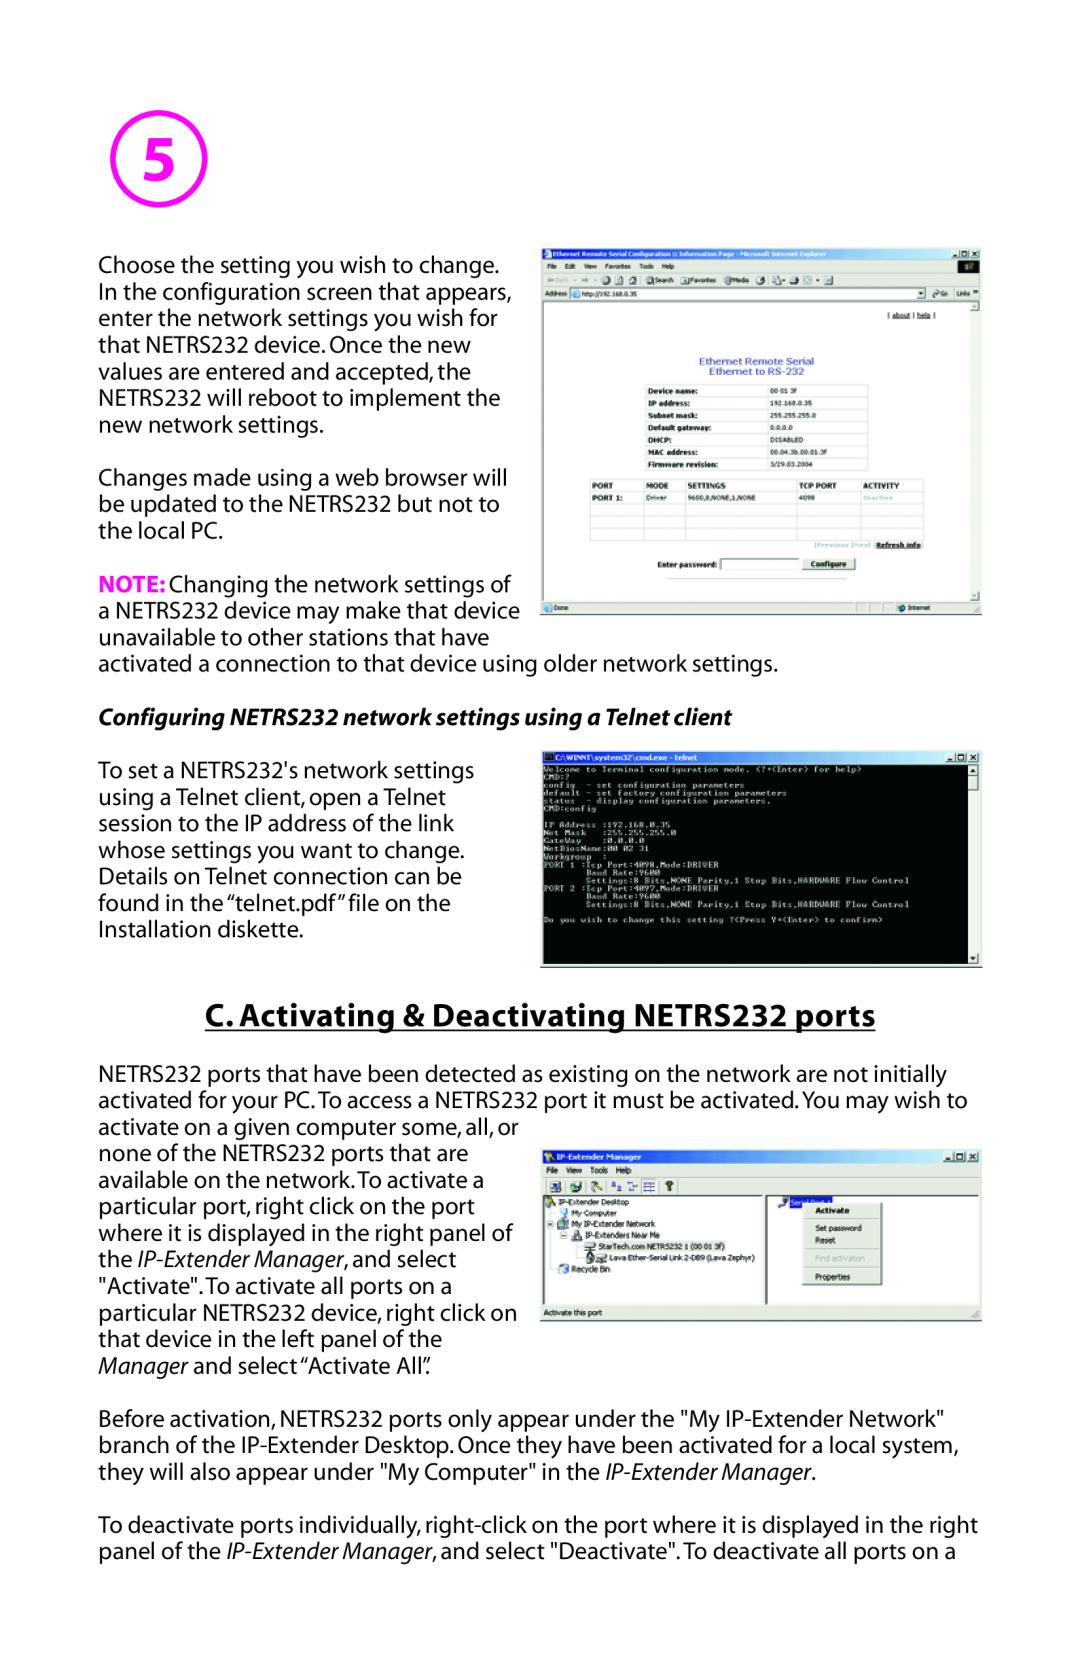 StarTech.com C. Activating & Deactivating NETRS232 ports, Configuring NETRS232 network settings using a Telnet client 